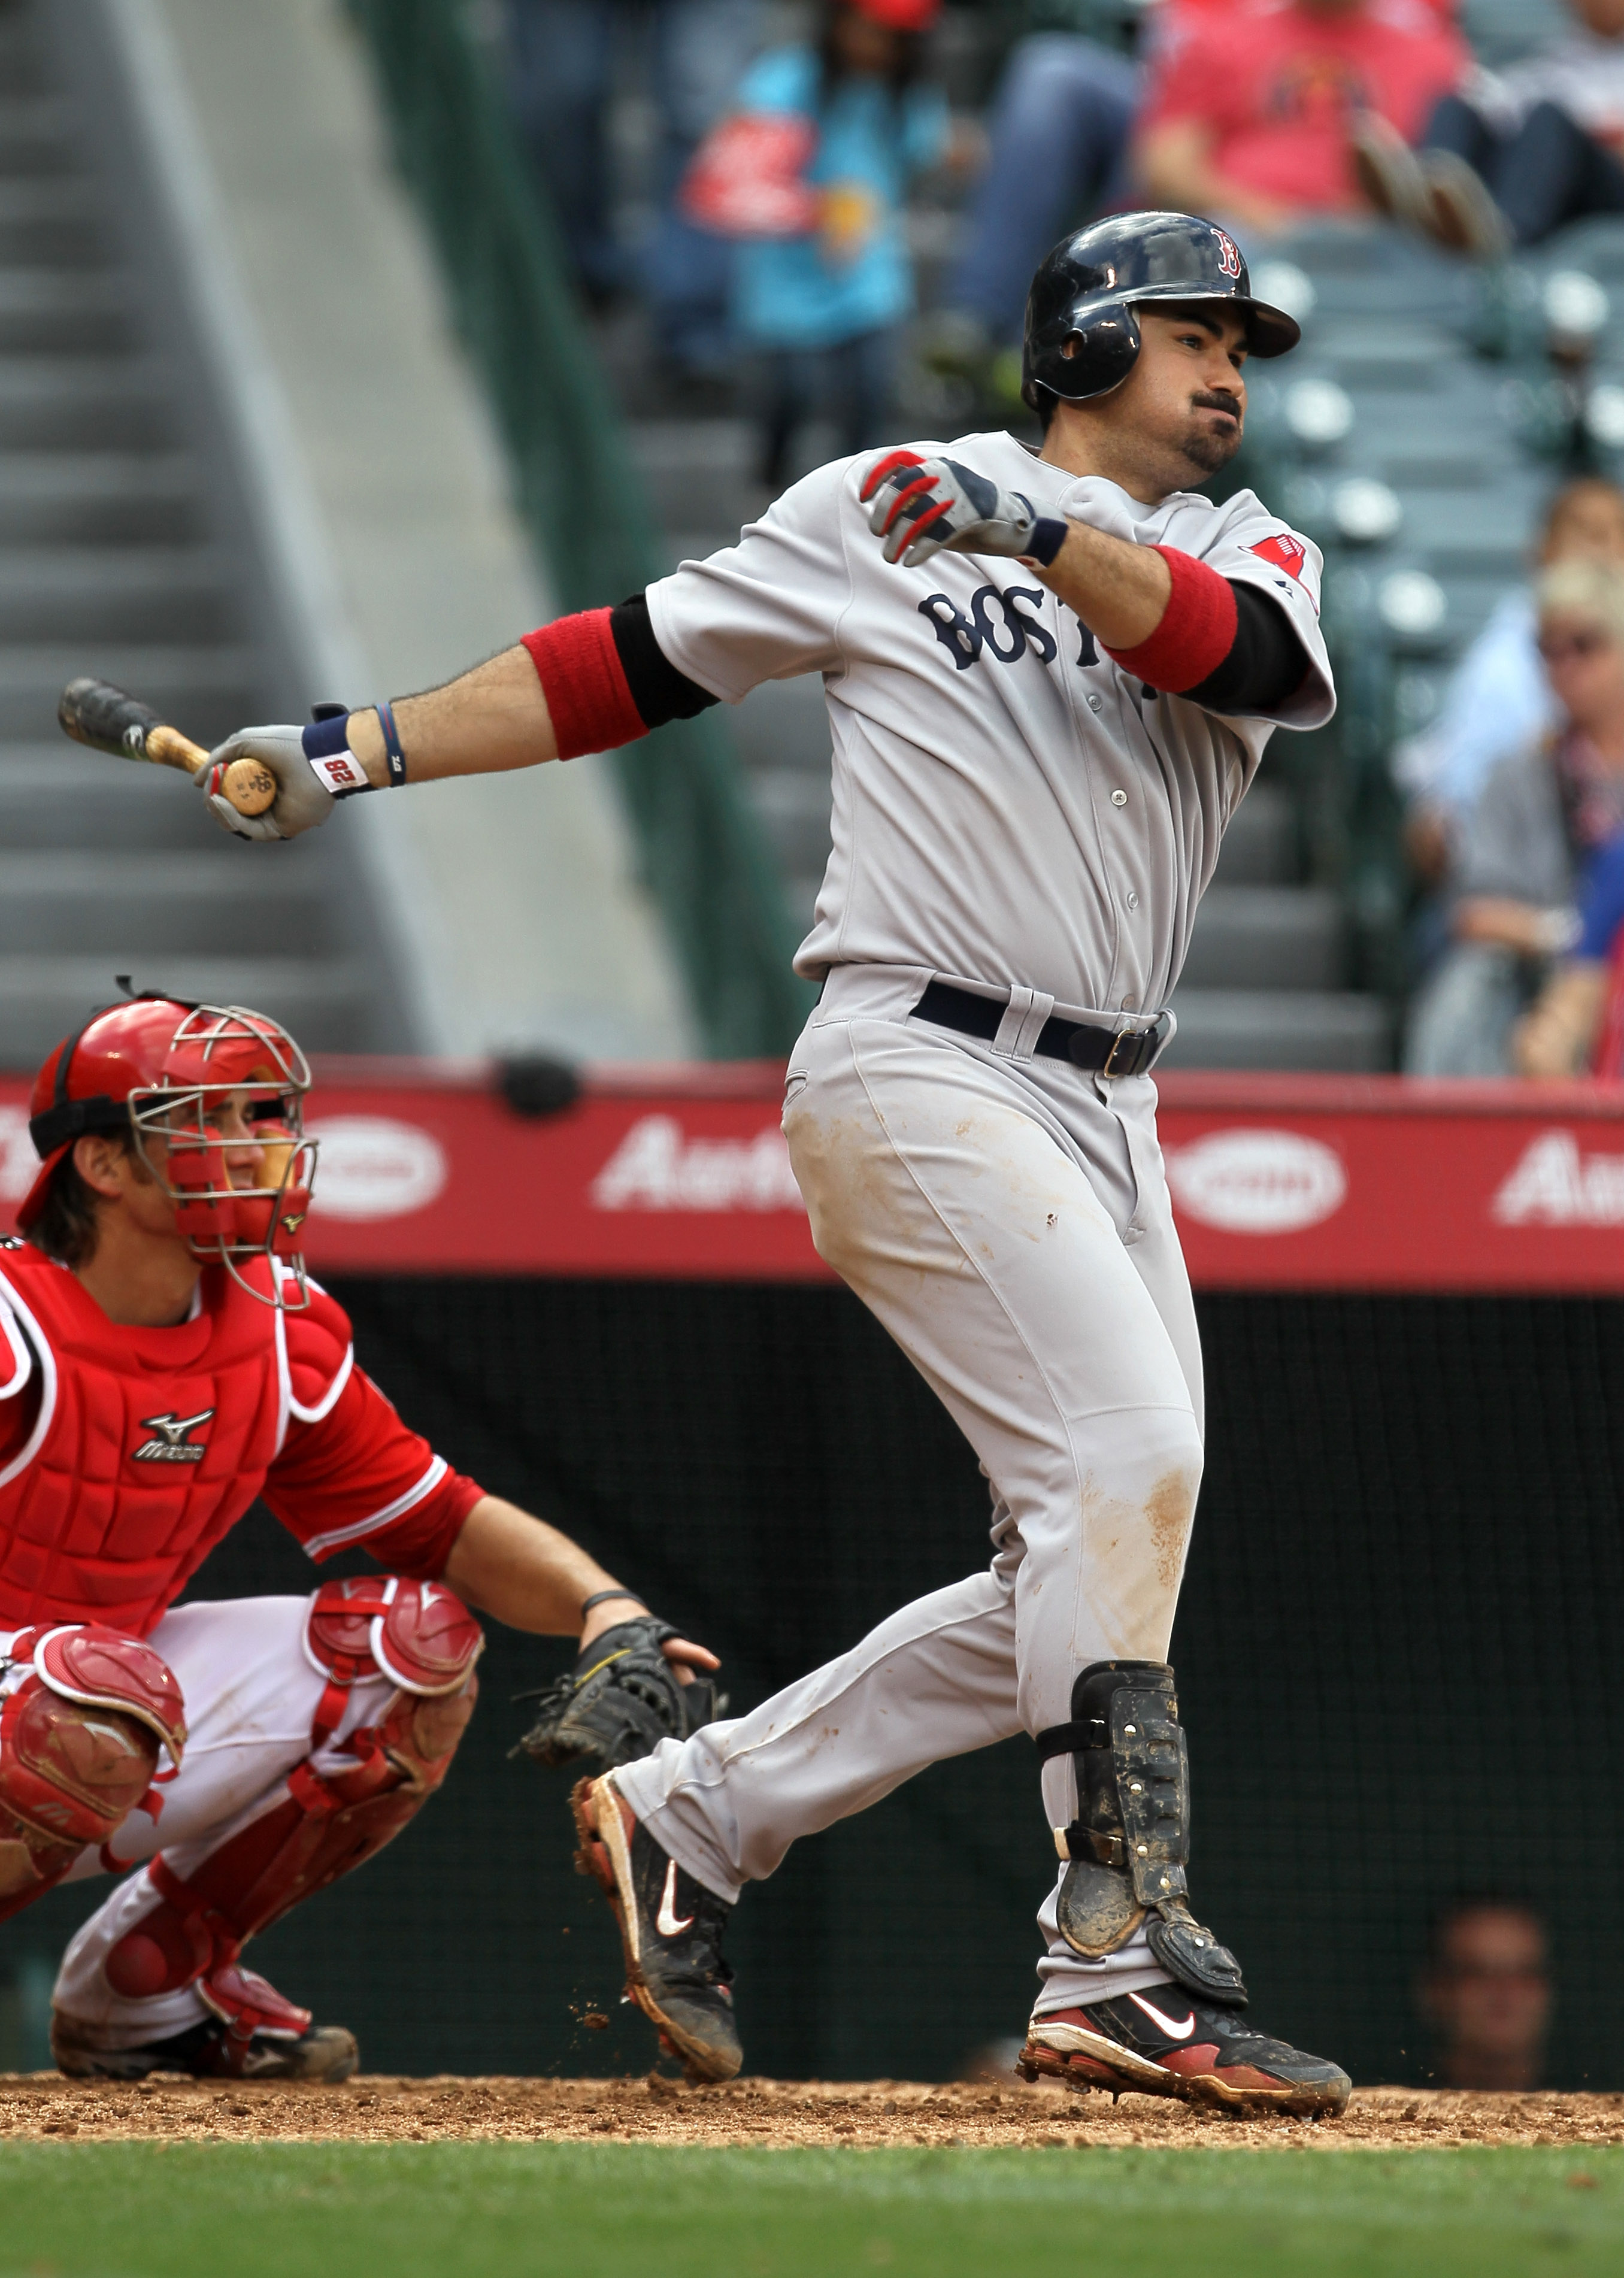 Anaheim, CA.Boston Red Sox first baseman Mike Napoli #12 at bat